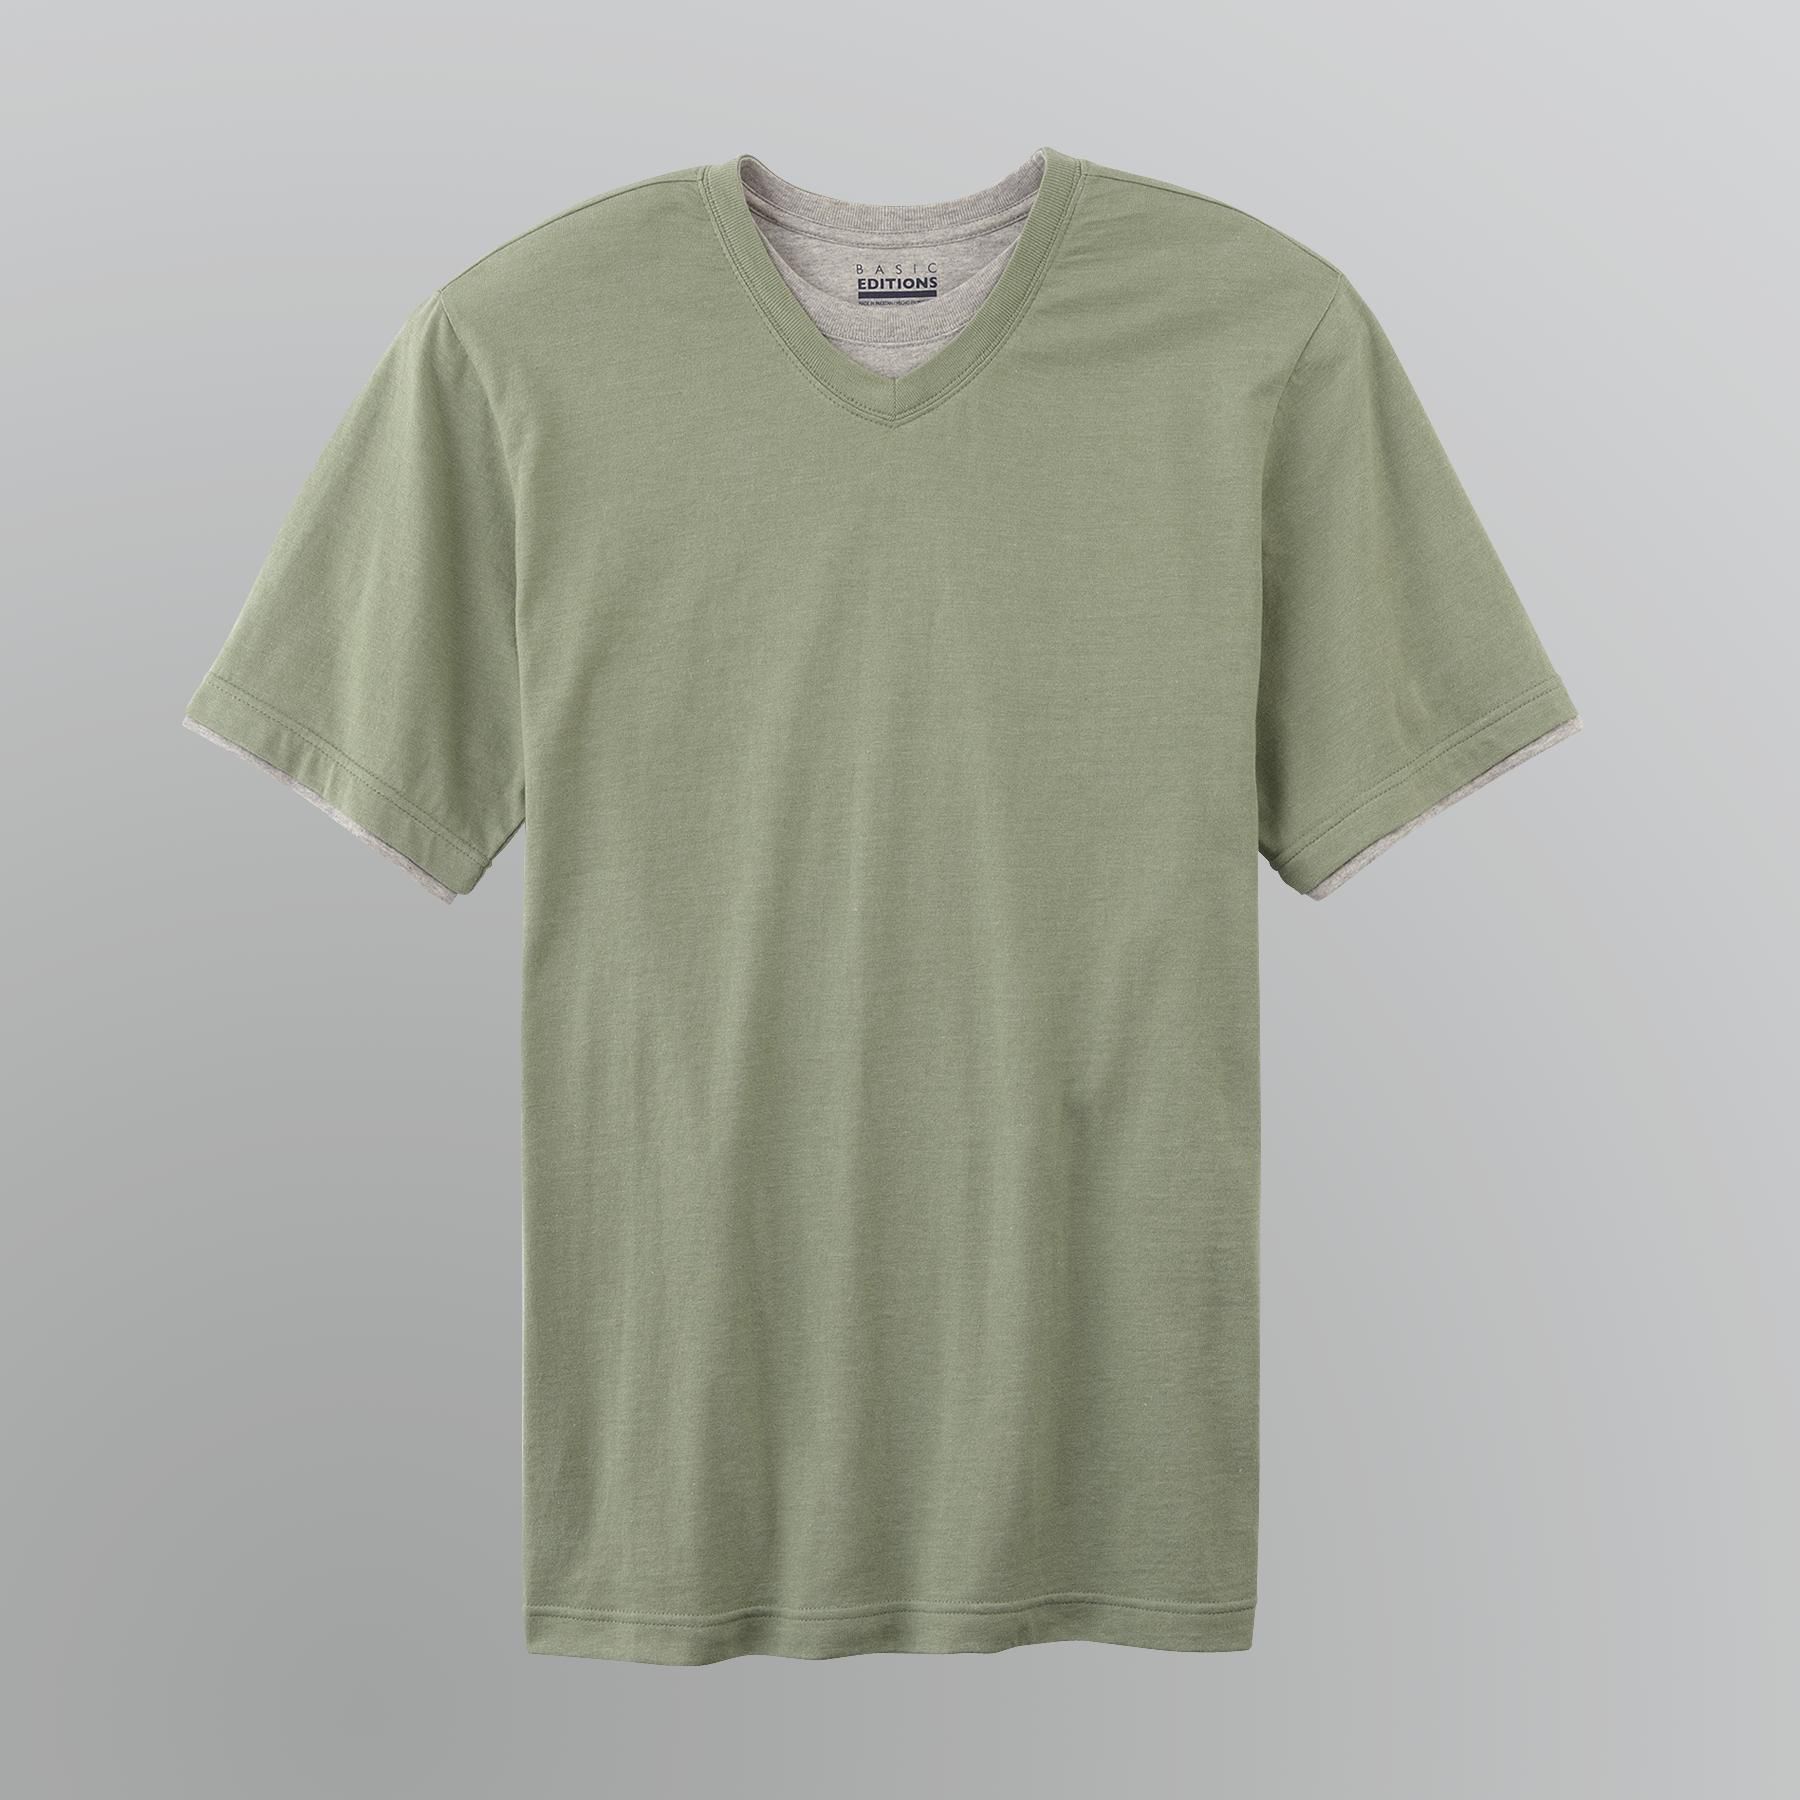 Basic Editions Men's Big & Tall Layered Look V-Neck T-Shirt